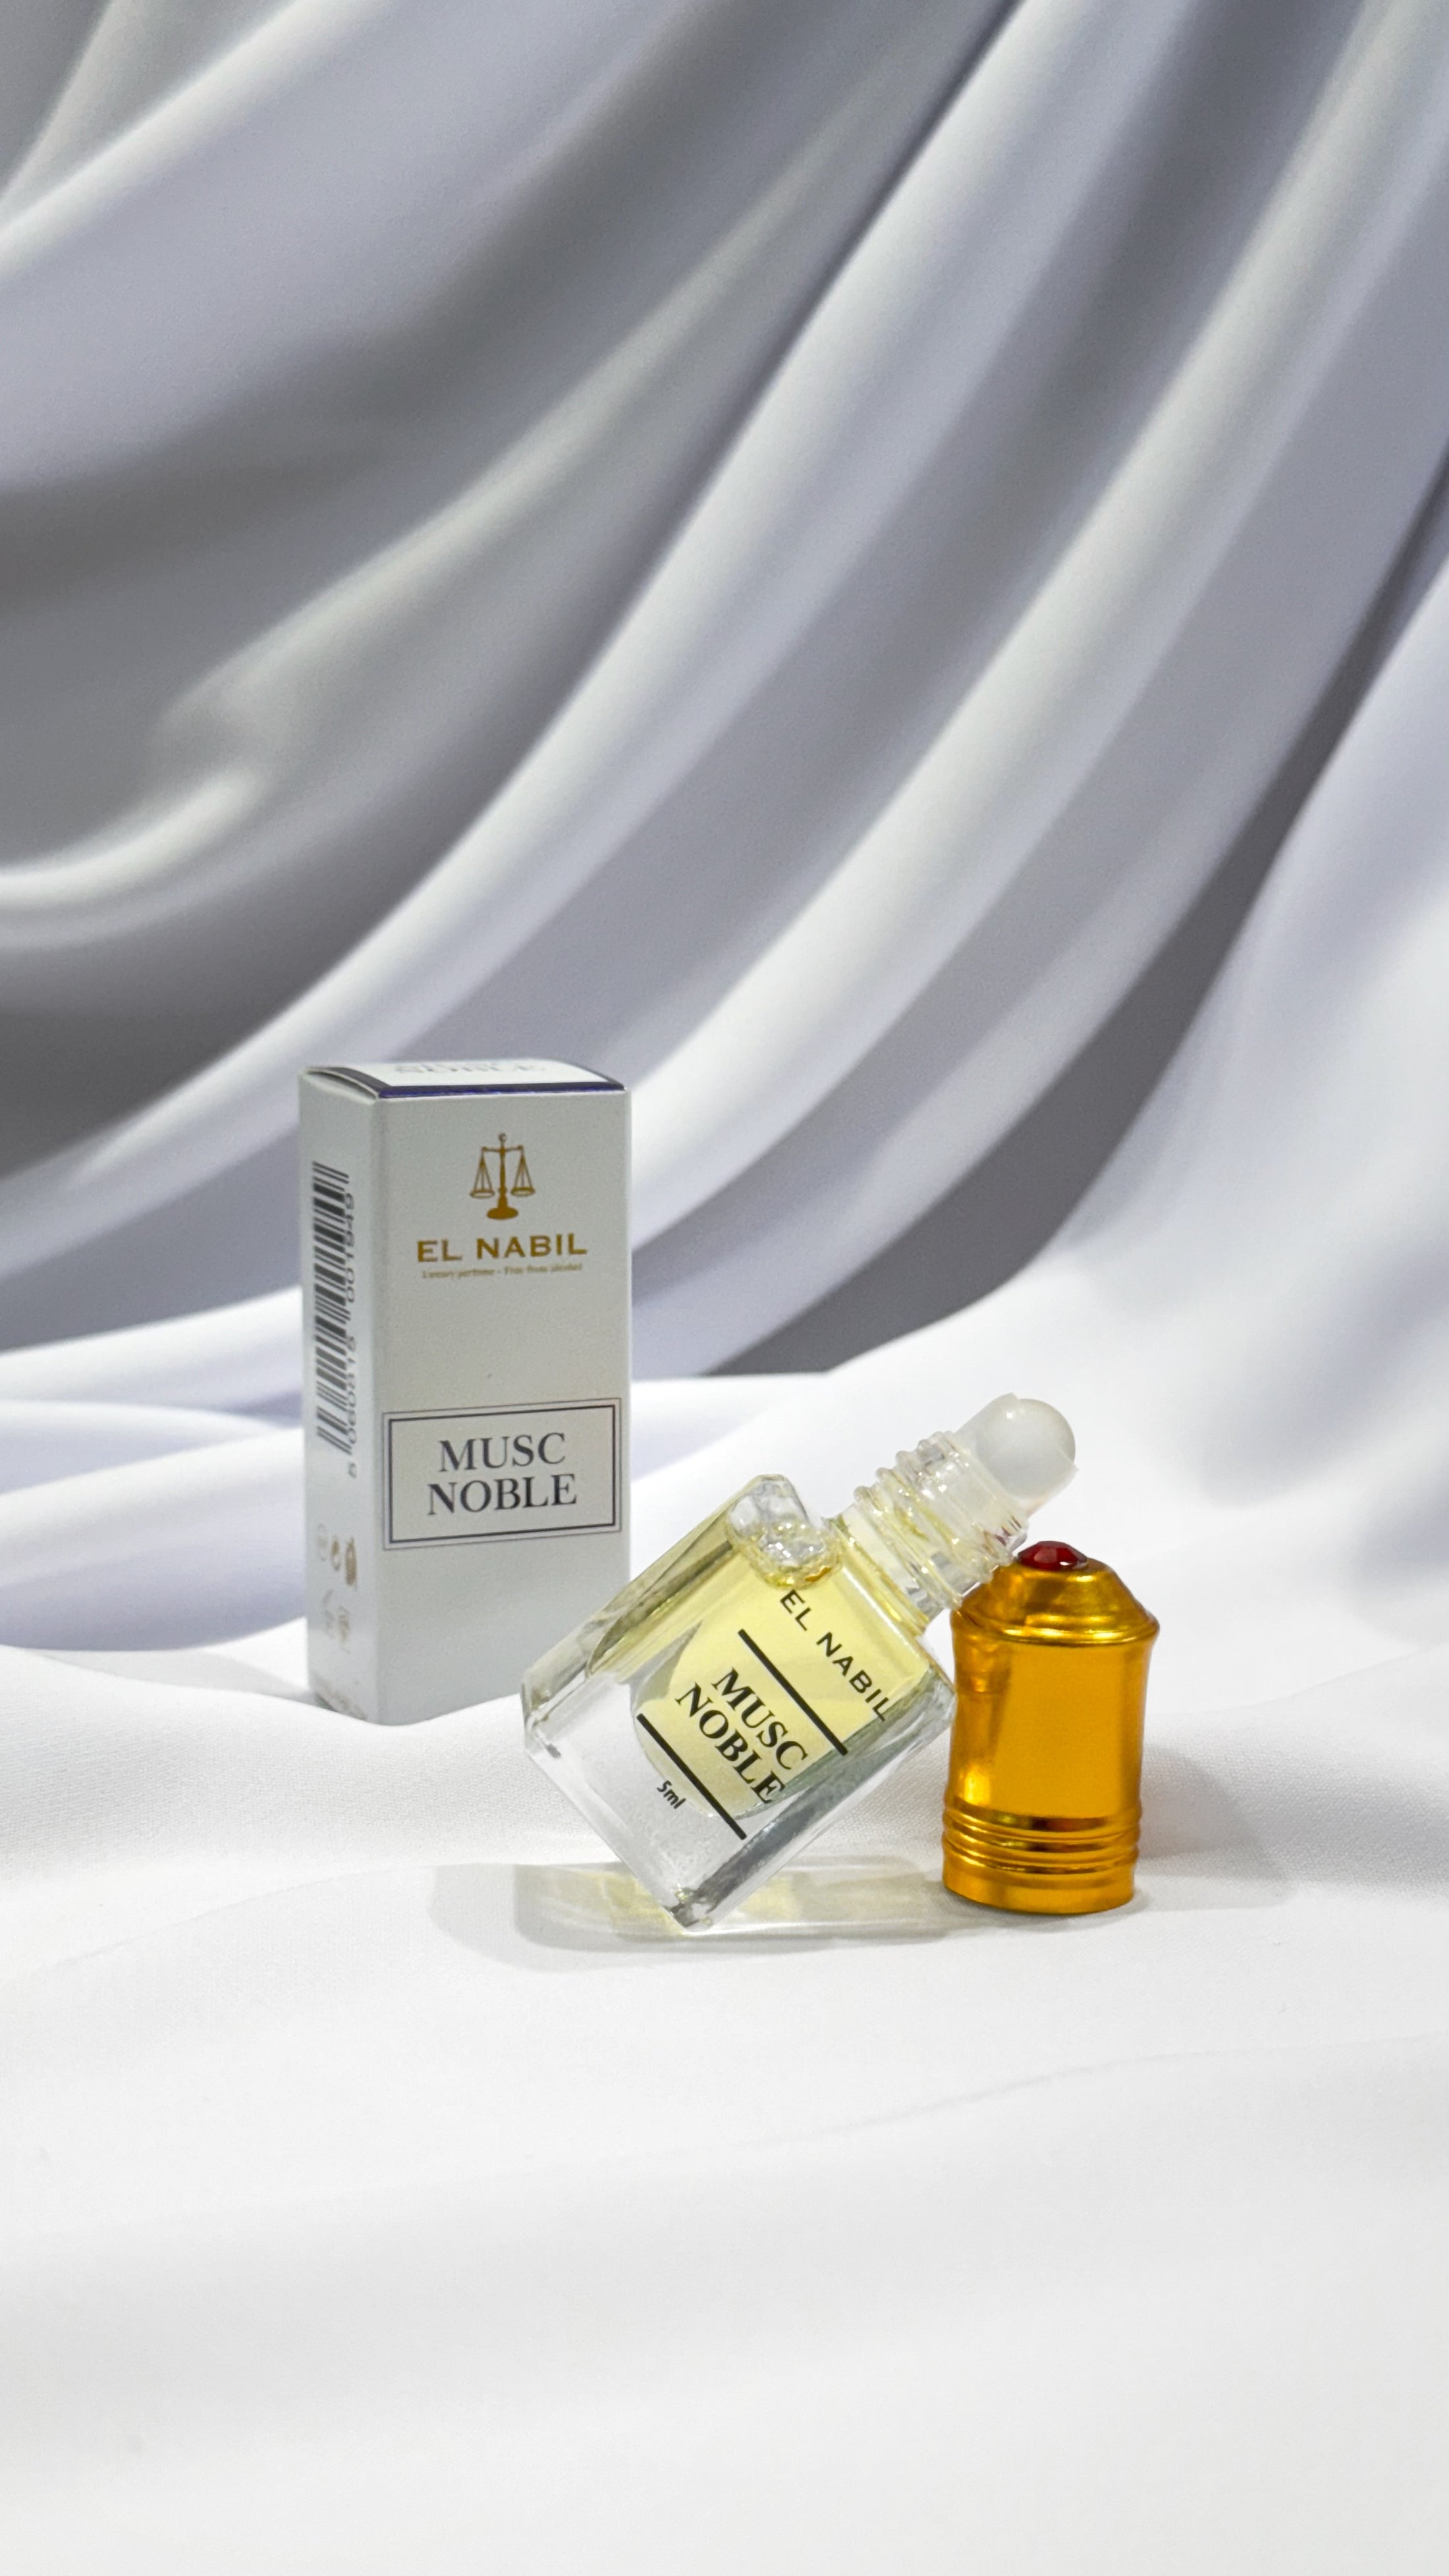 MUSC NOBLE perfume extract